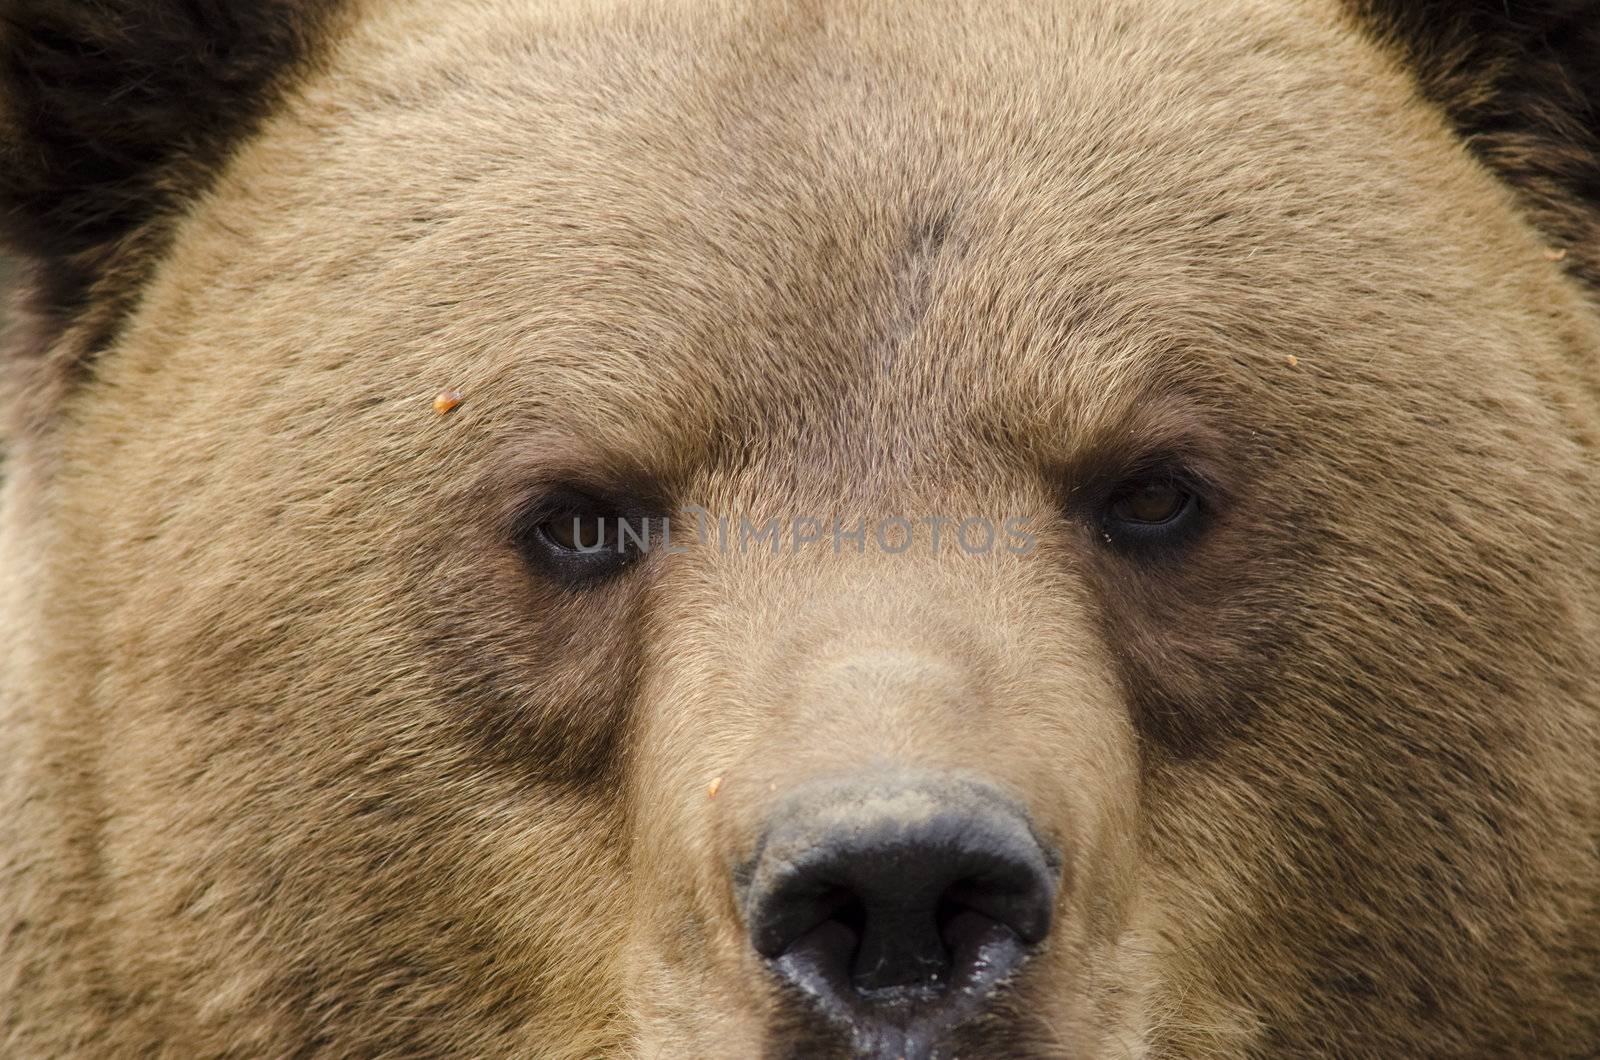 Face of a brown bear by Arrxxx